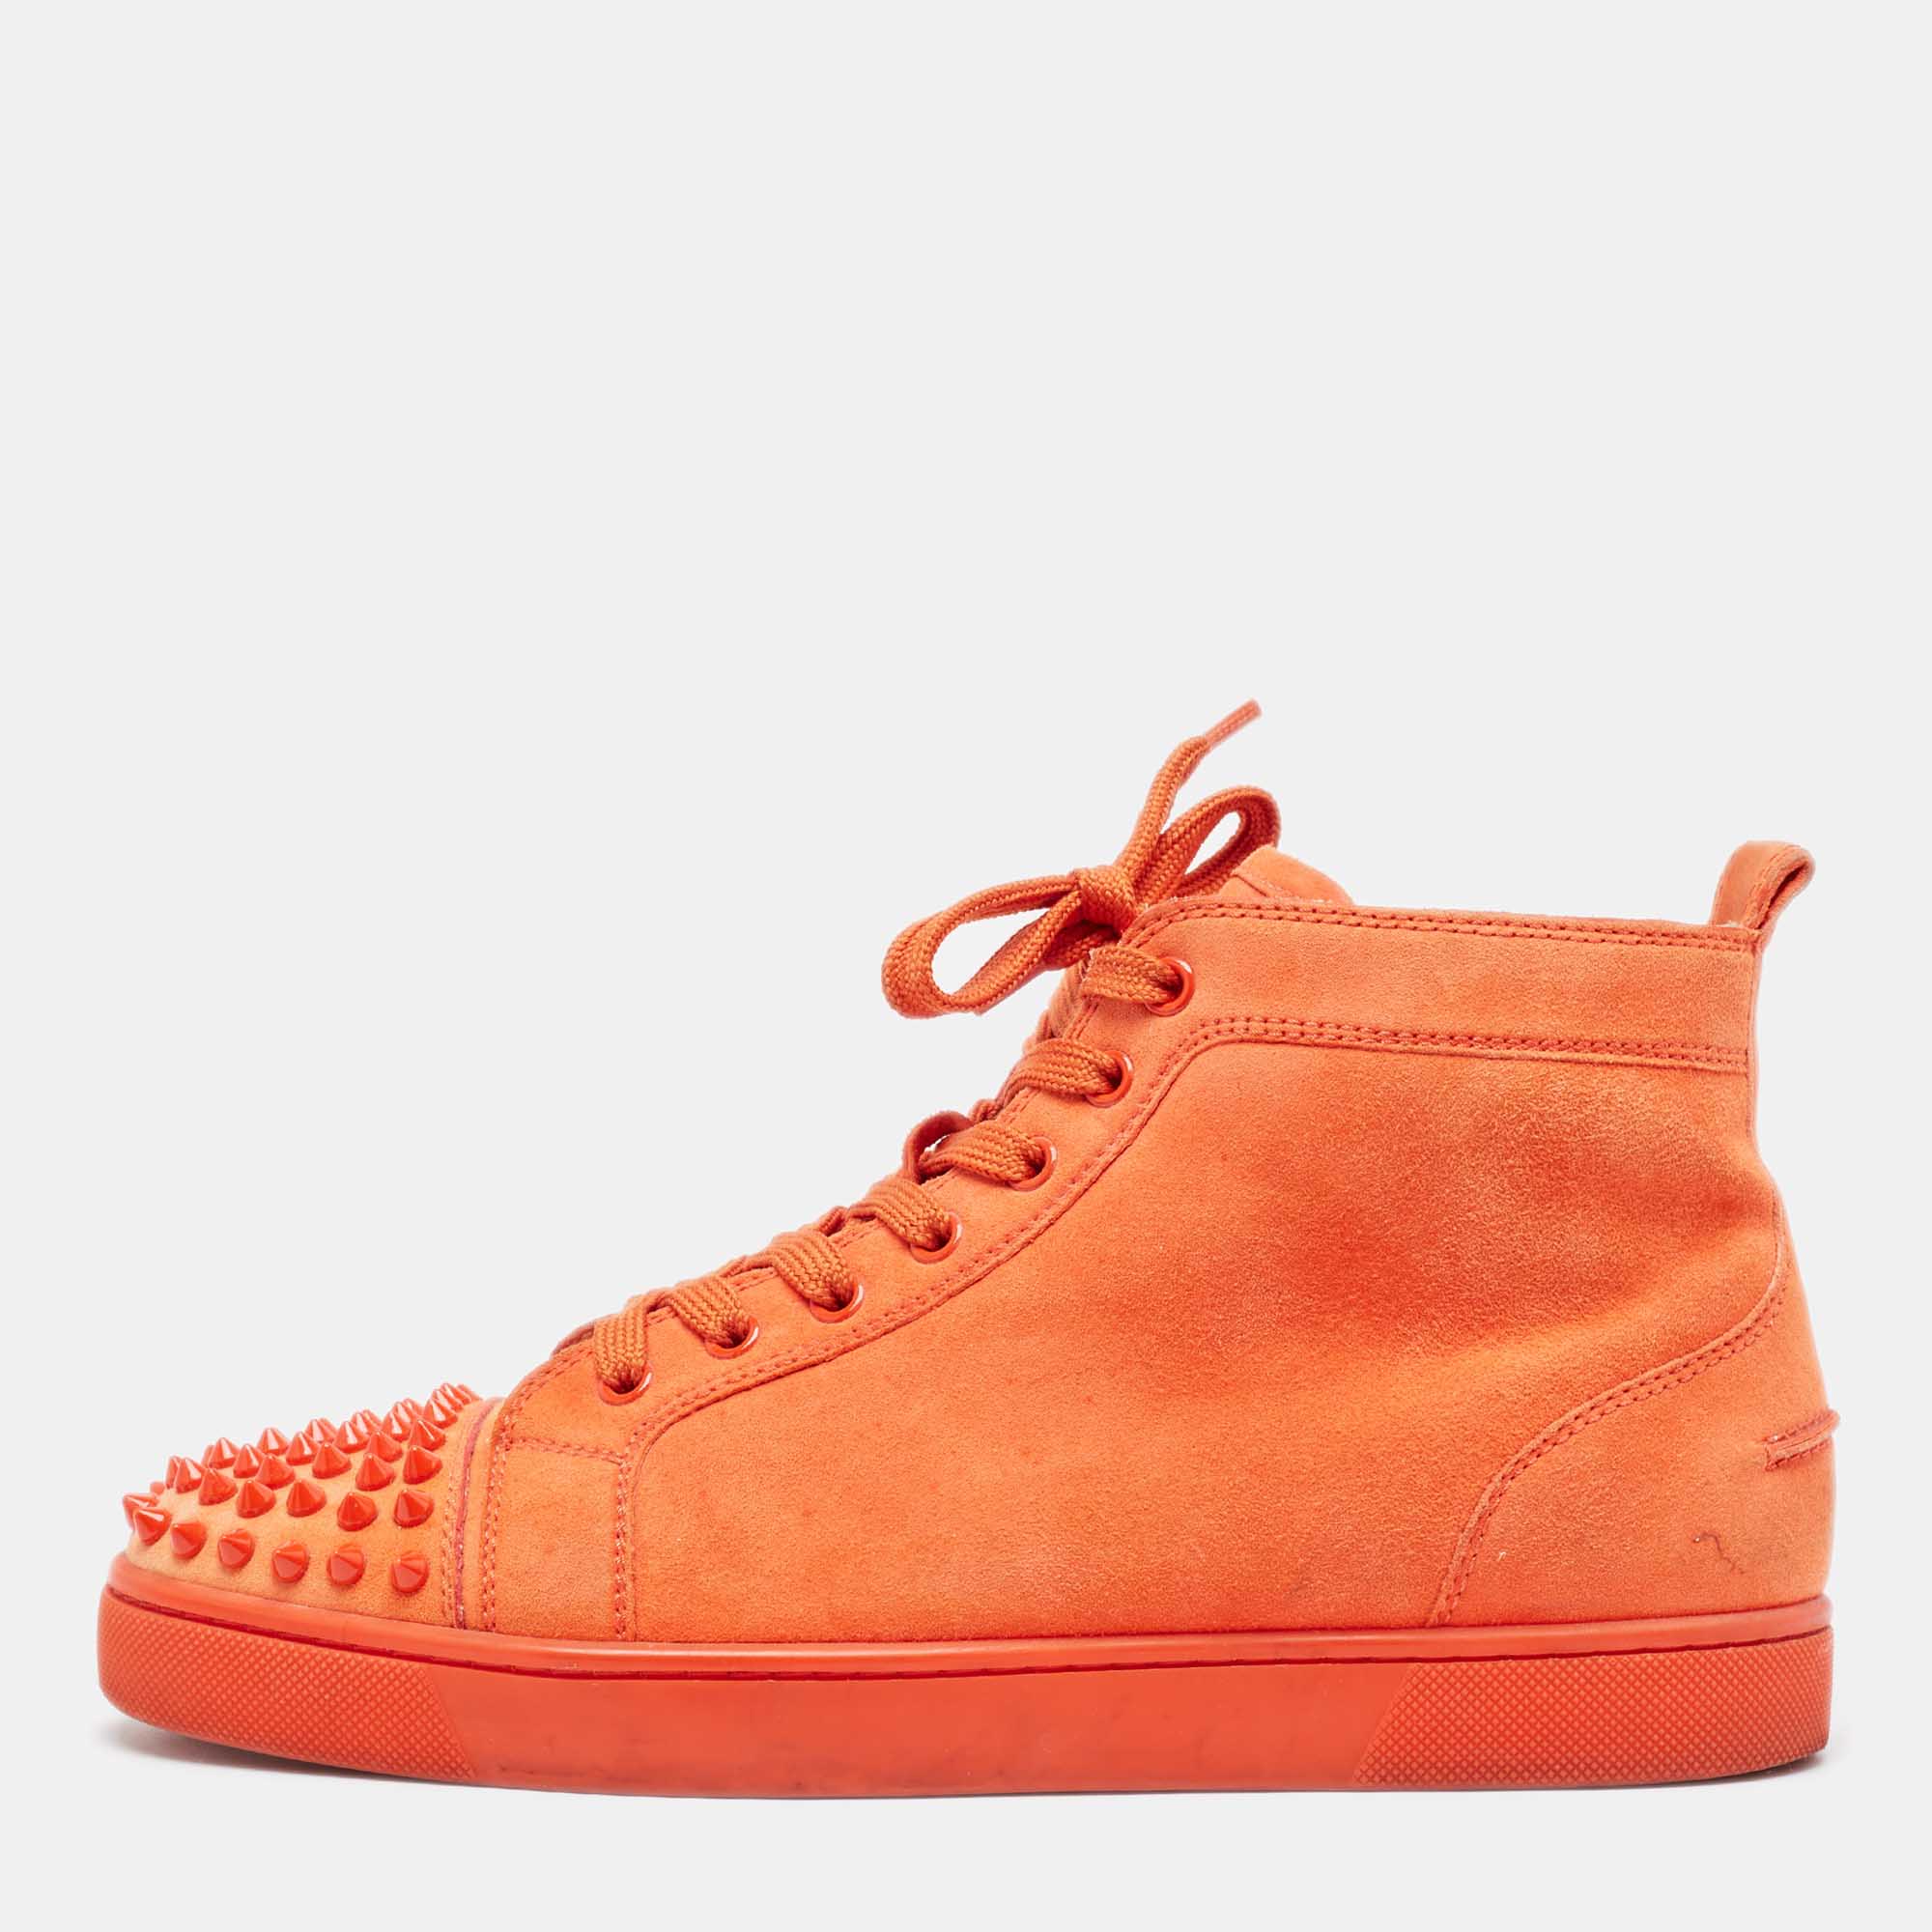 Christian louboutin orange suede lou spikes sneakers size 41